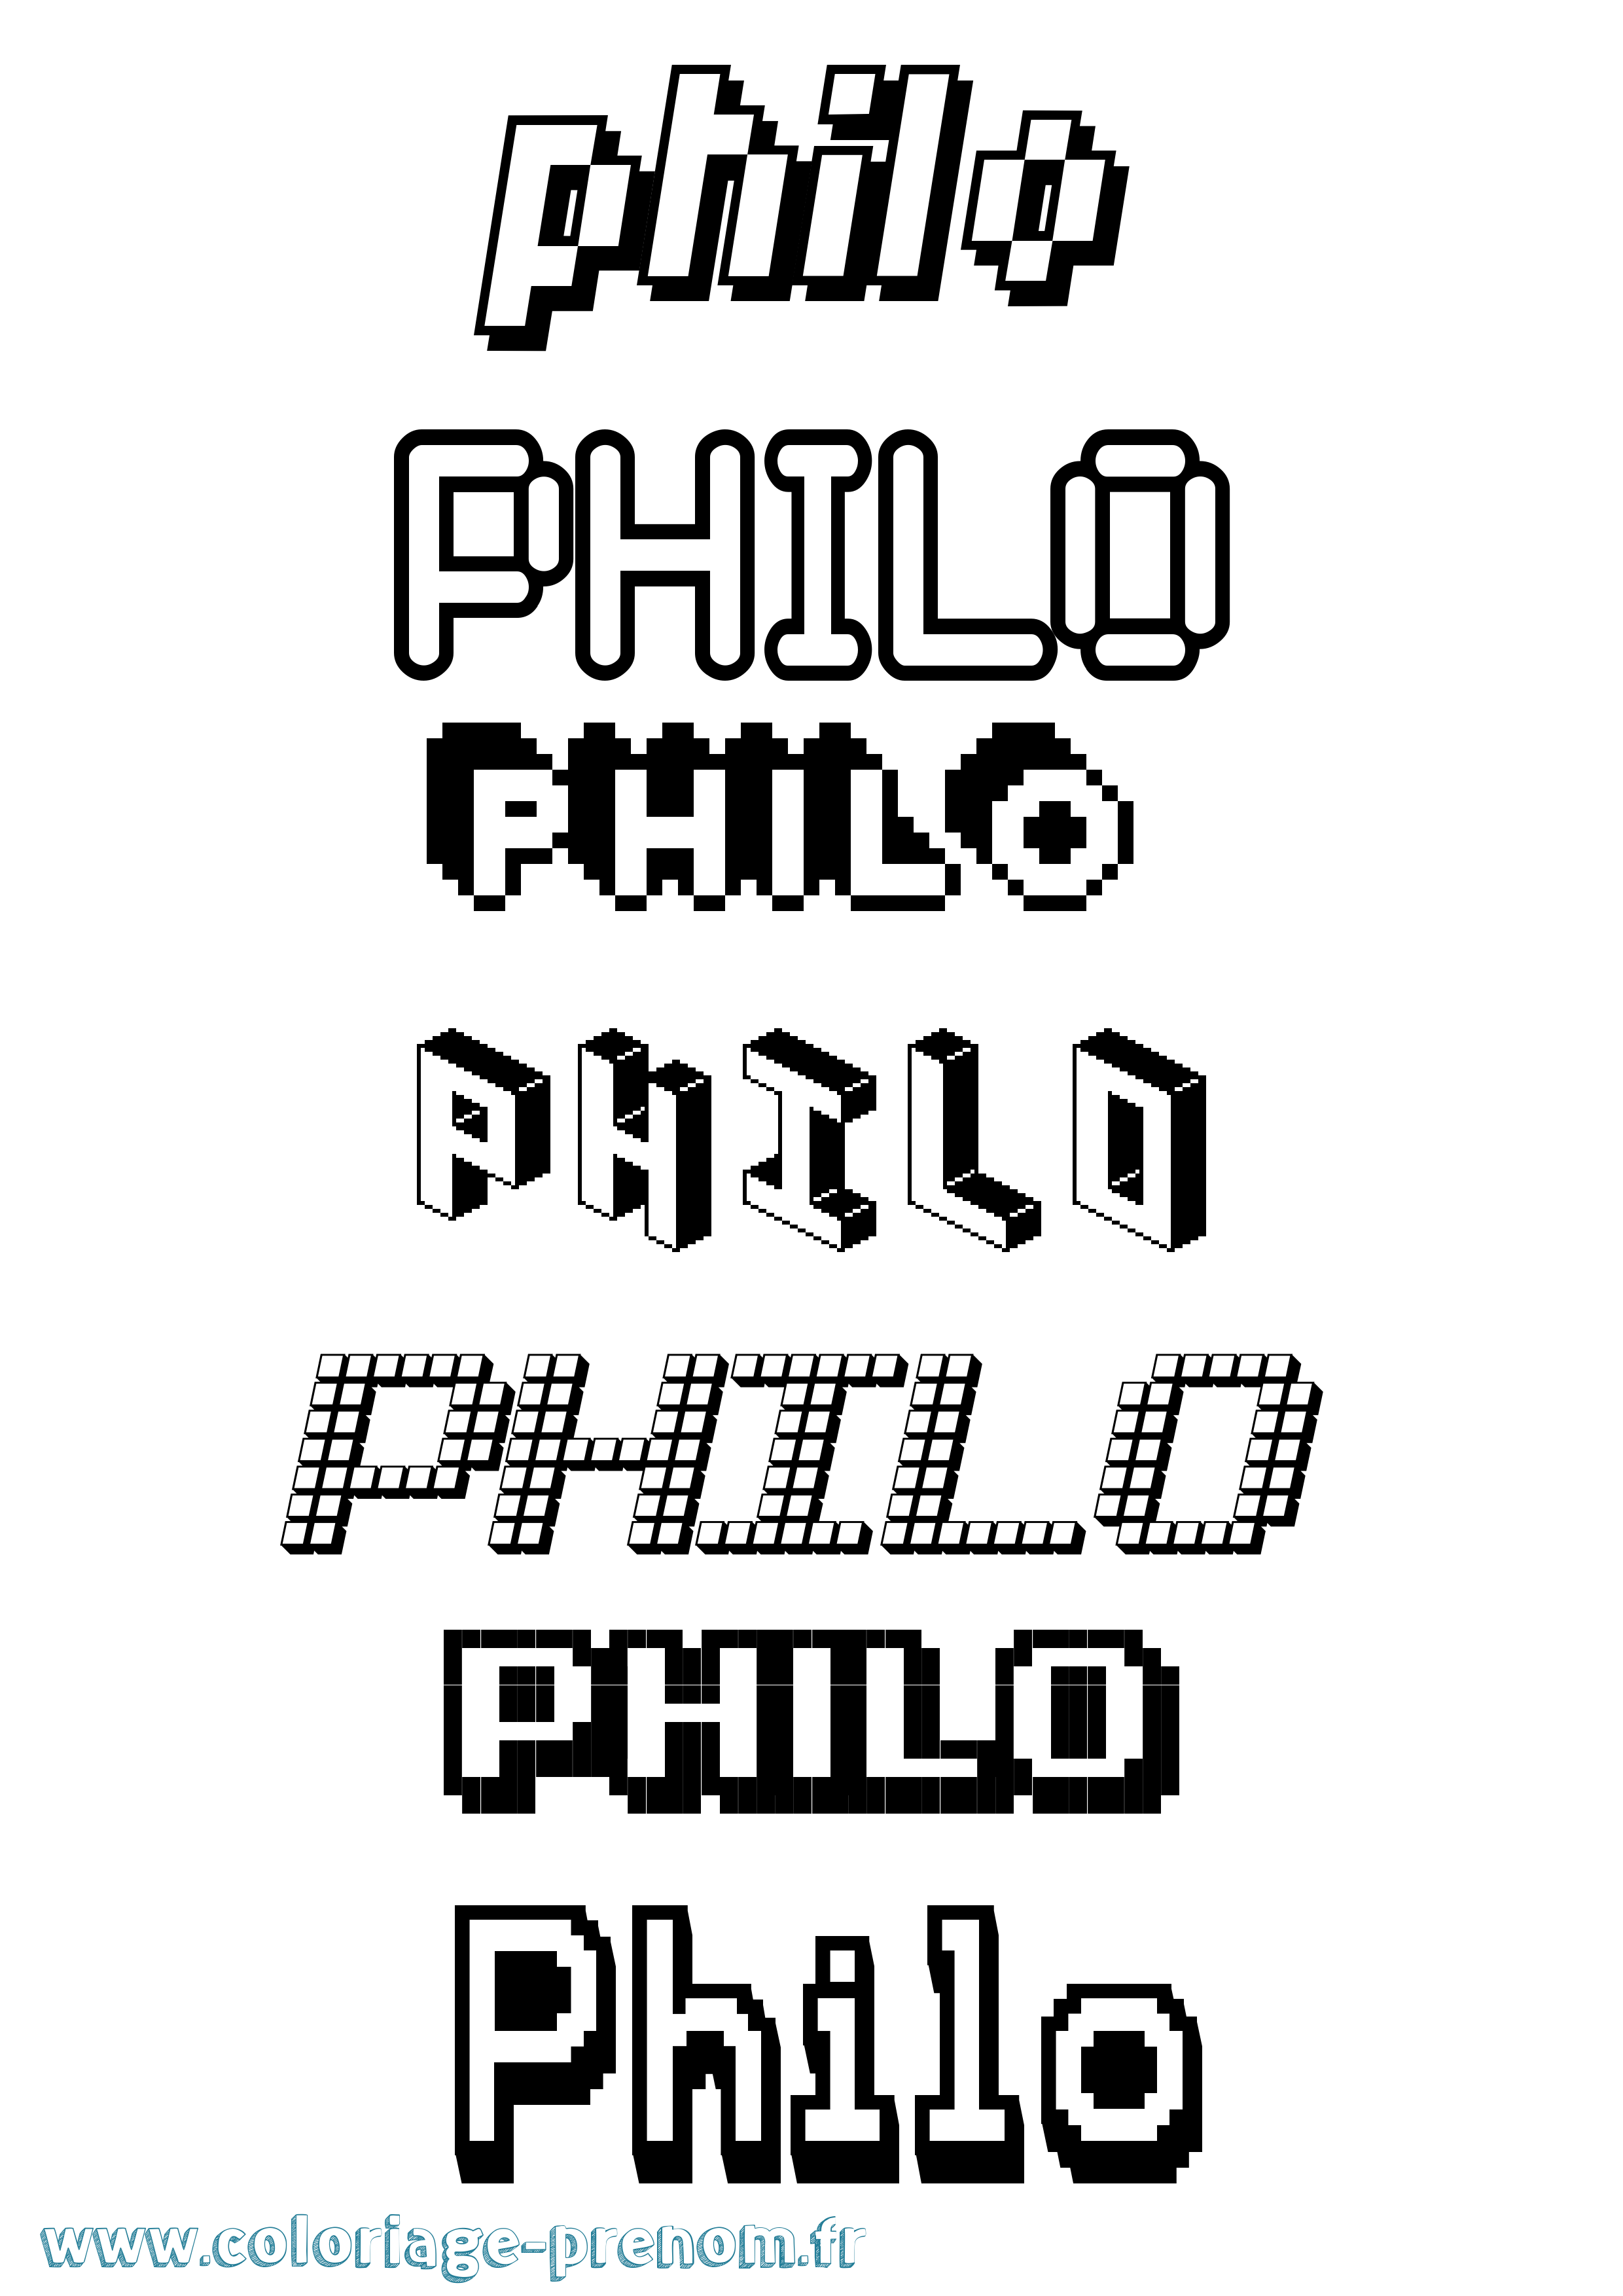 Coloriage prénom Philo Pixel